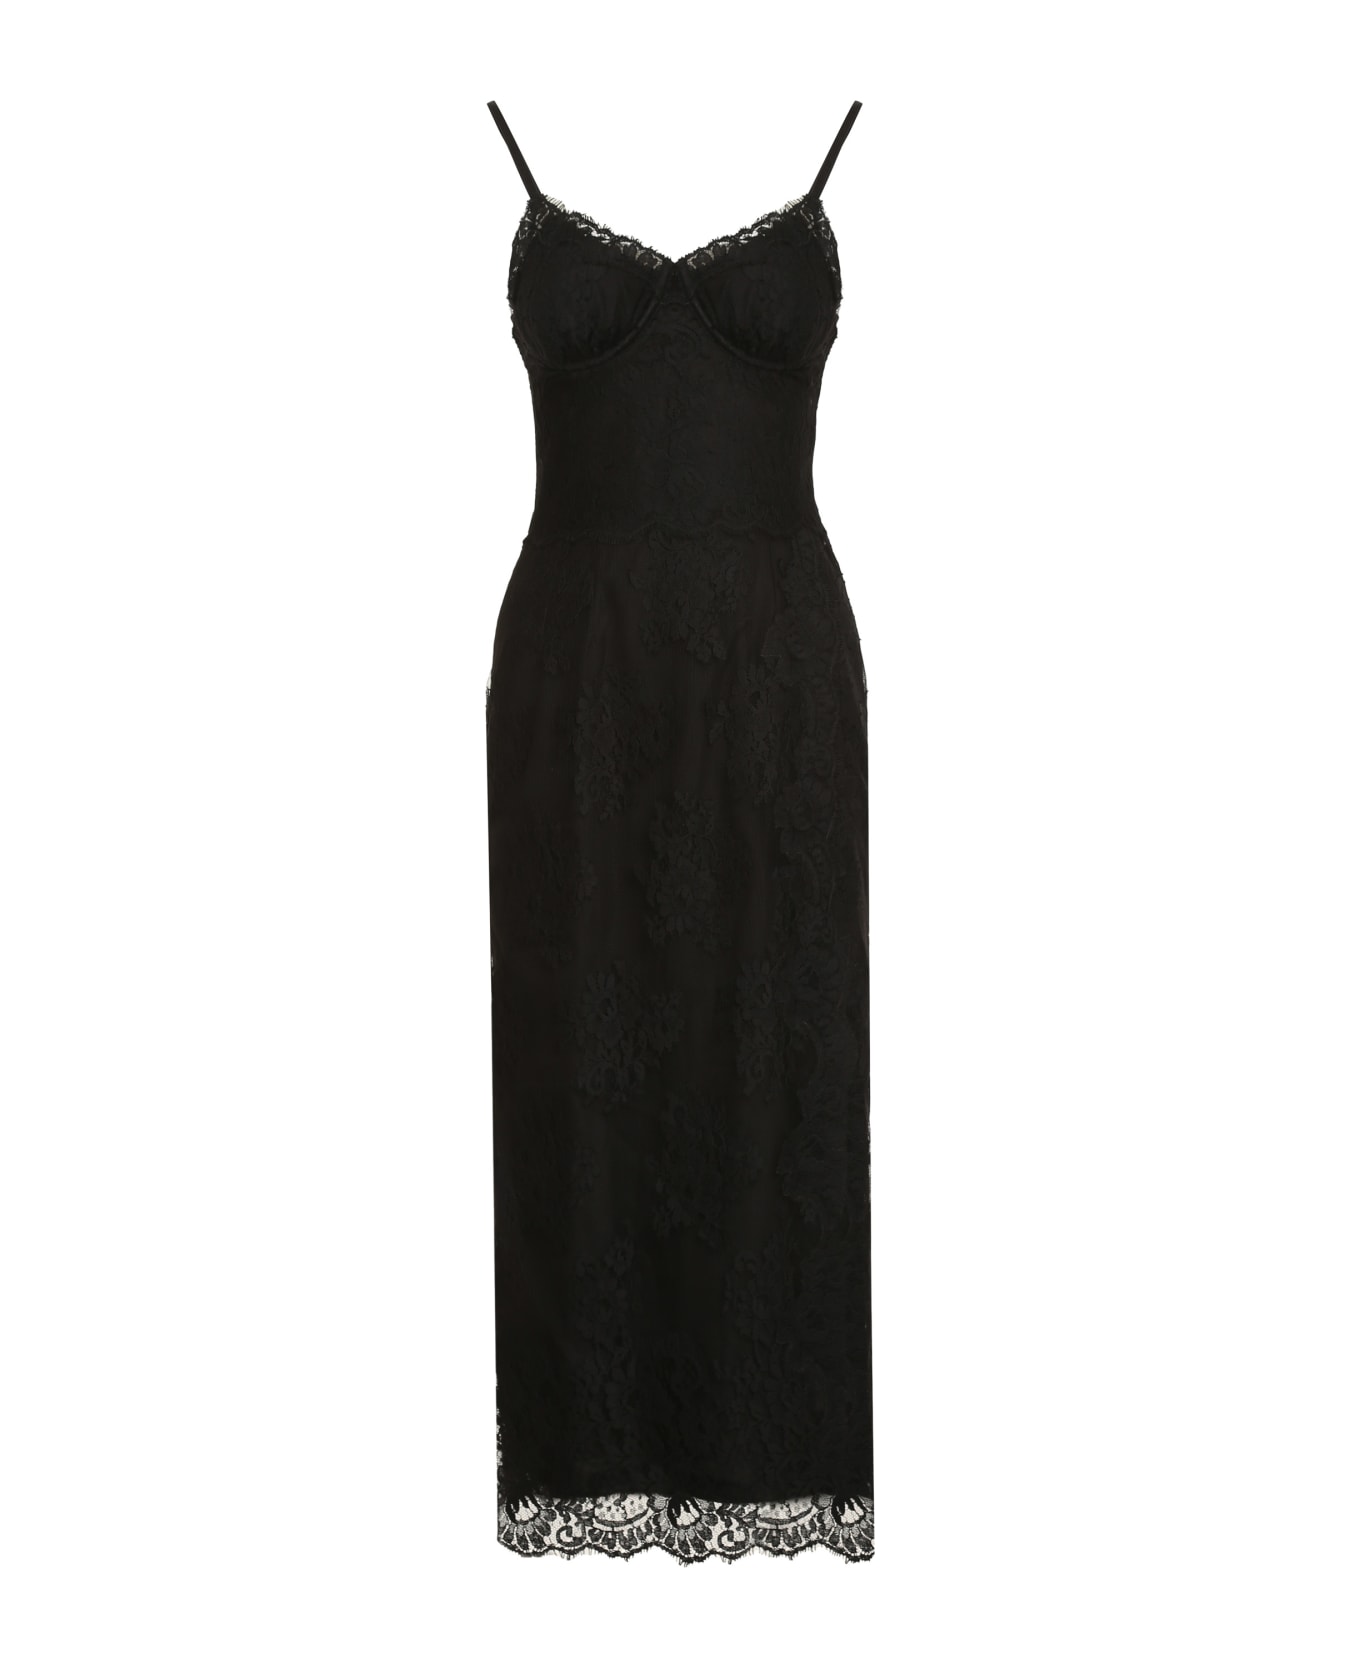 Dolce & Gabbana Lace Dress - black